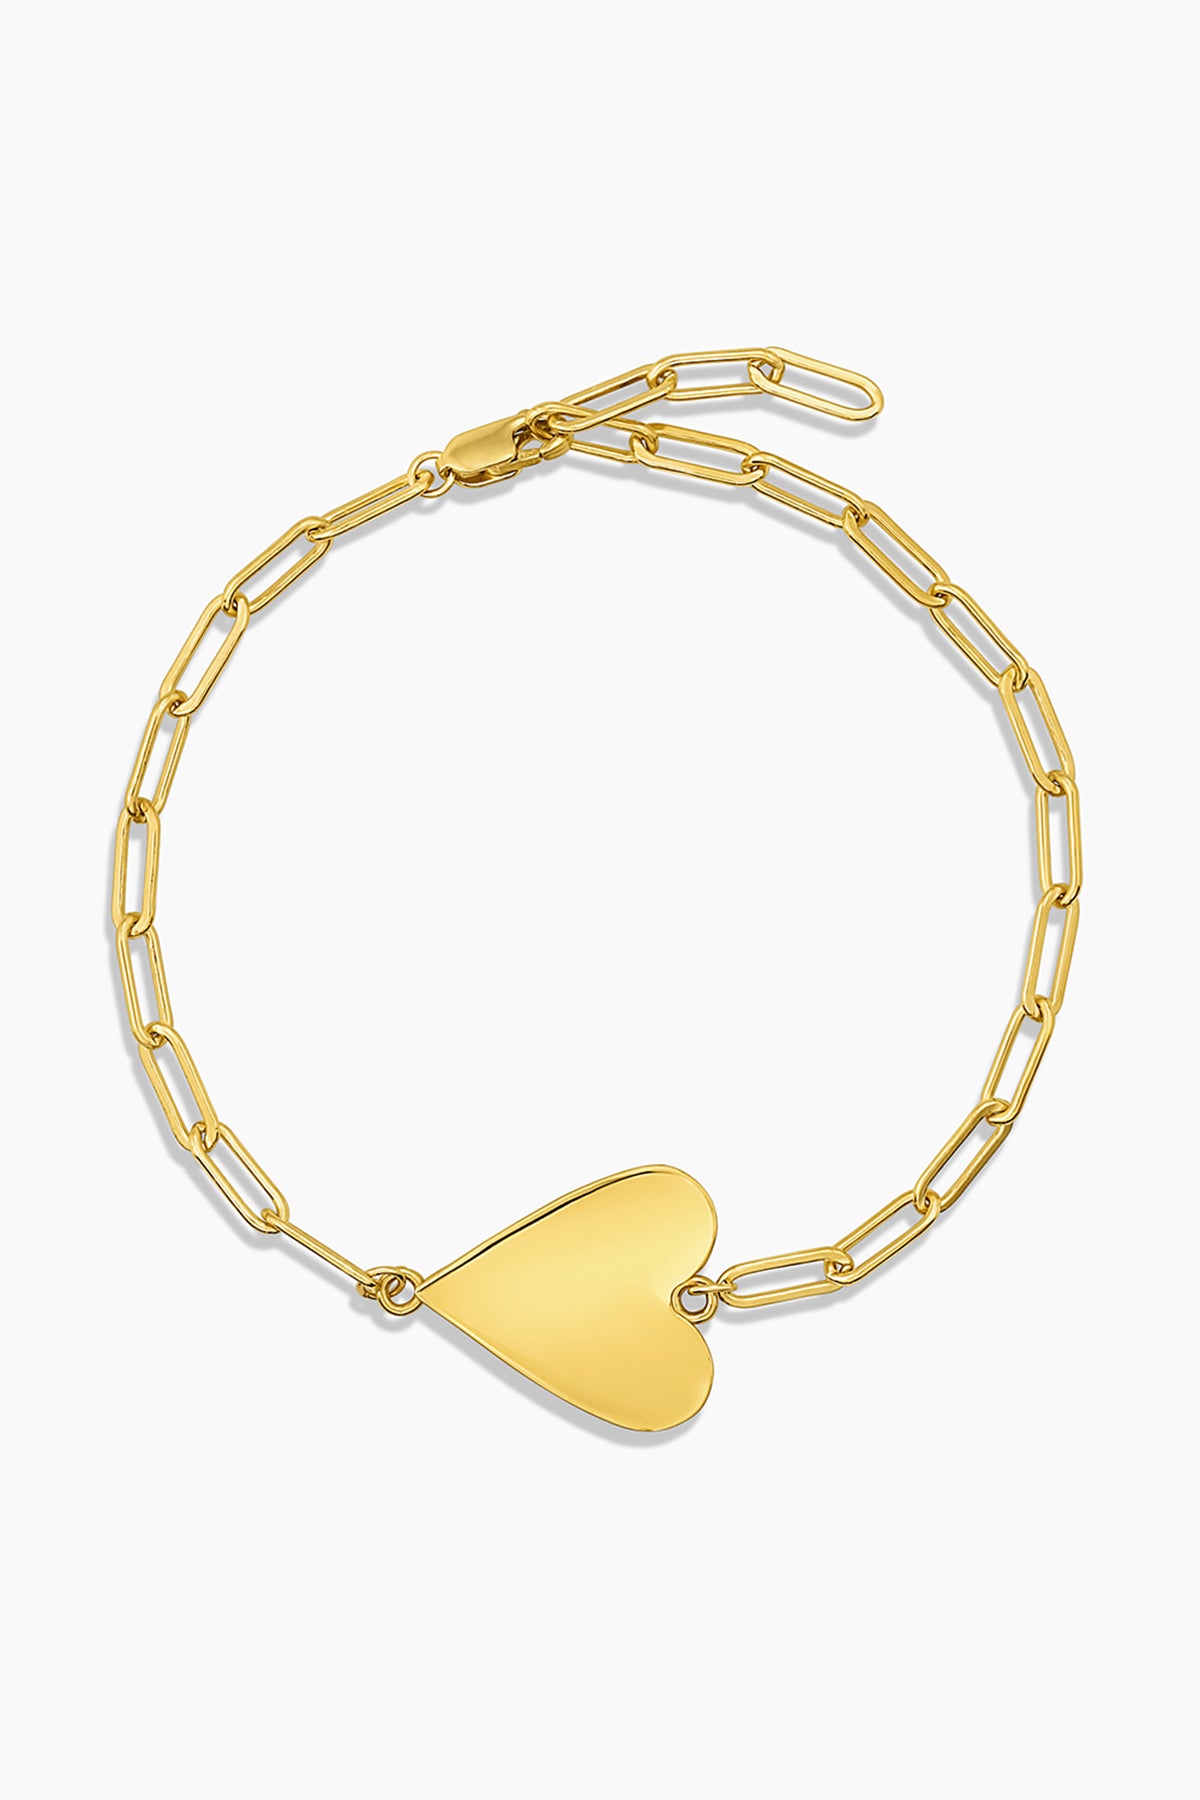 A AMAYA HEART BRACELET BY THATCH chain bracelet with a heart charm.-35526304071873